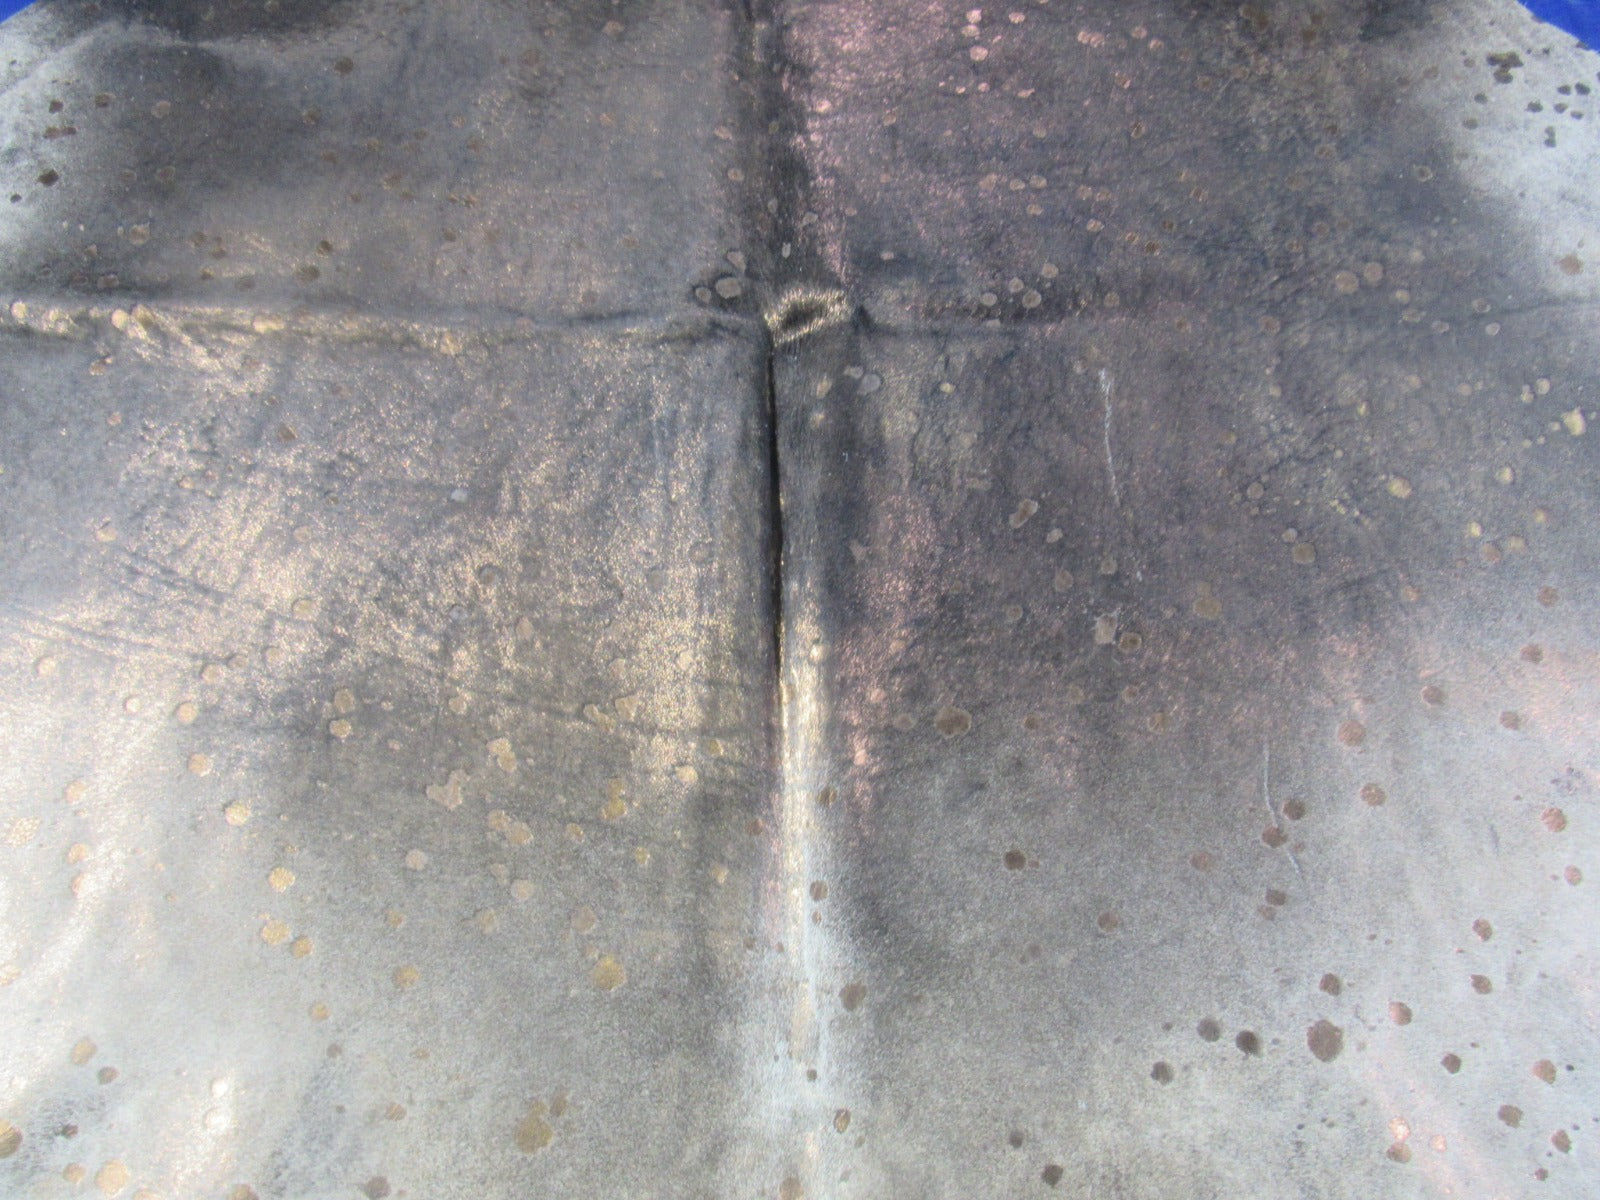 Natural Grey & Black Cowhide with Bronze Metallic Acid Wash - Size: 8x6.5 feet K-260